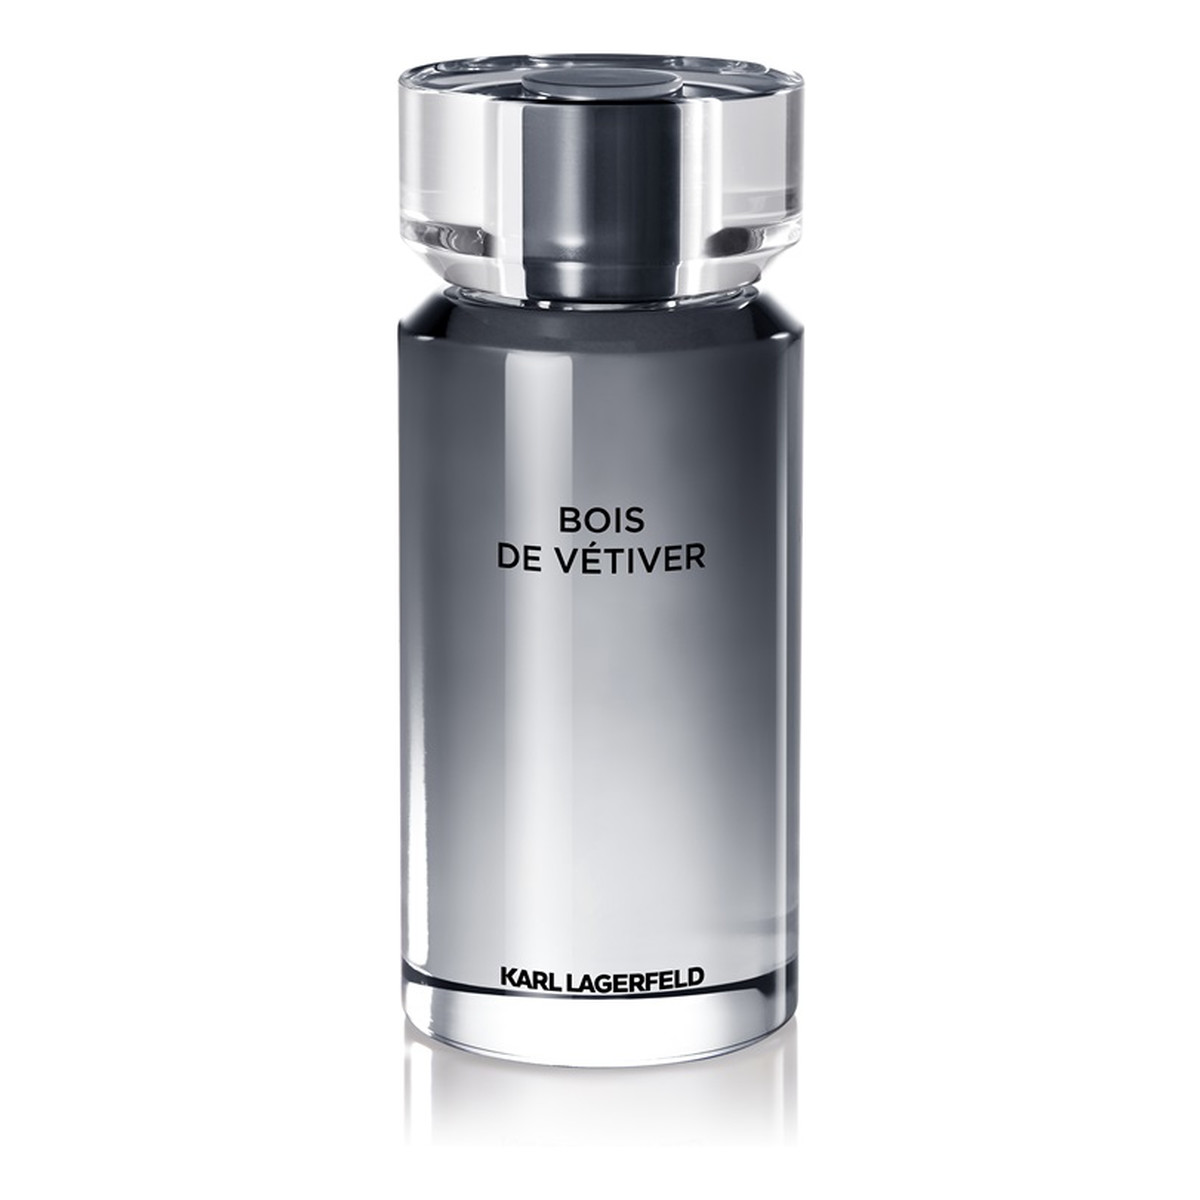 Karl Lagerfeld Bois De Vetiver Les Parfums Matieres woda toaletowa 100ml